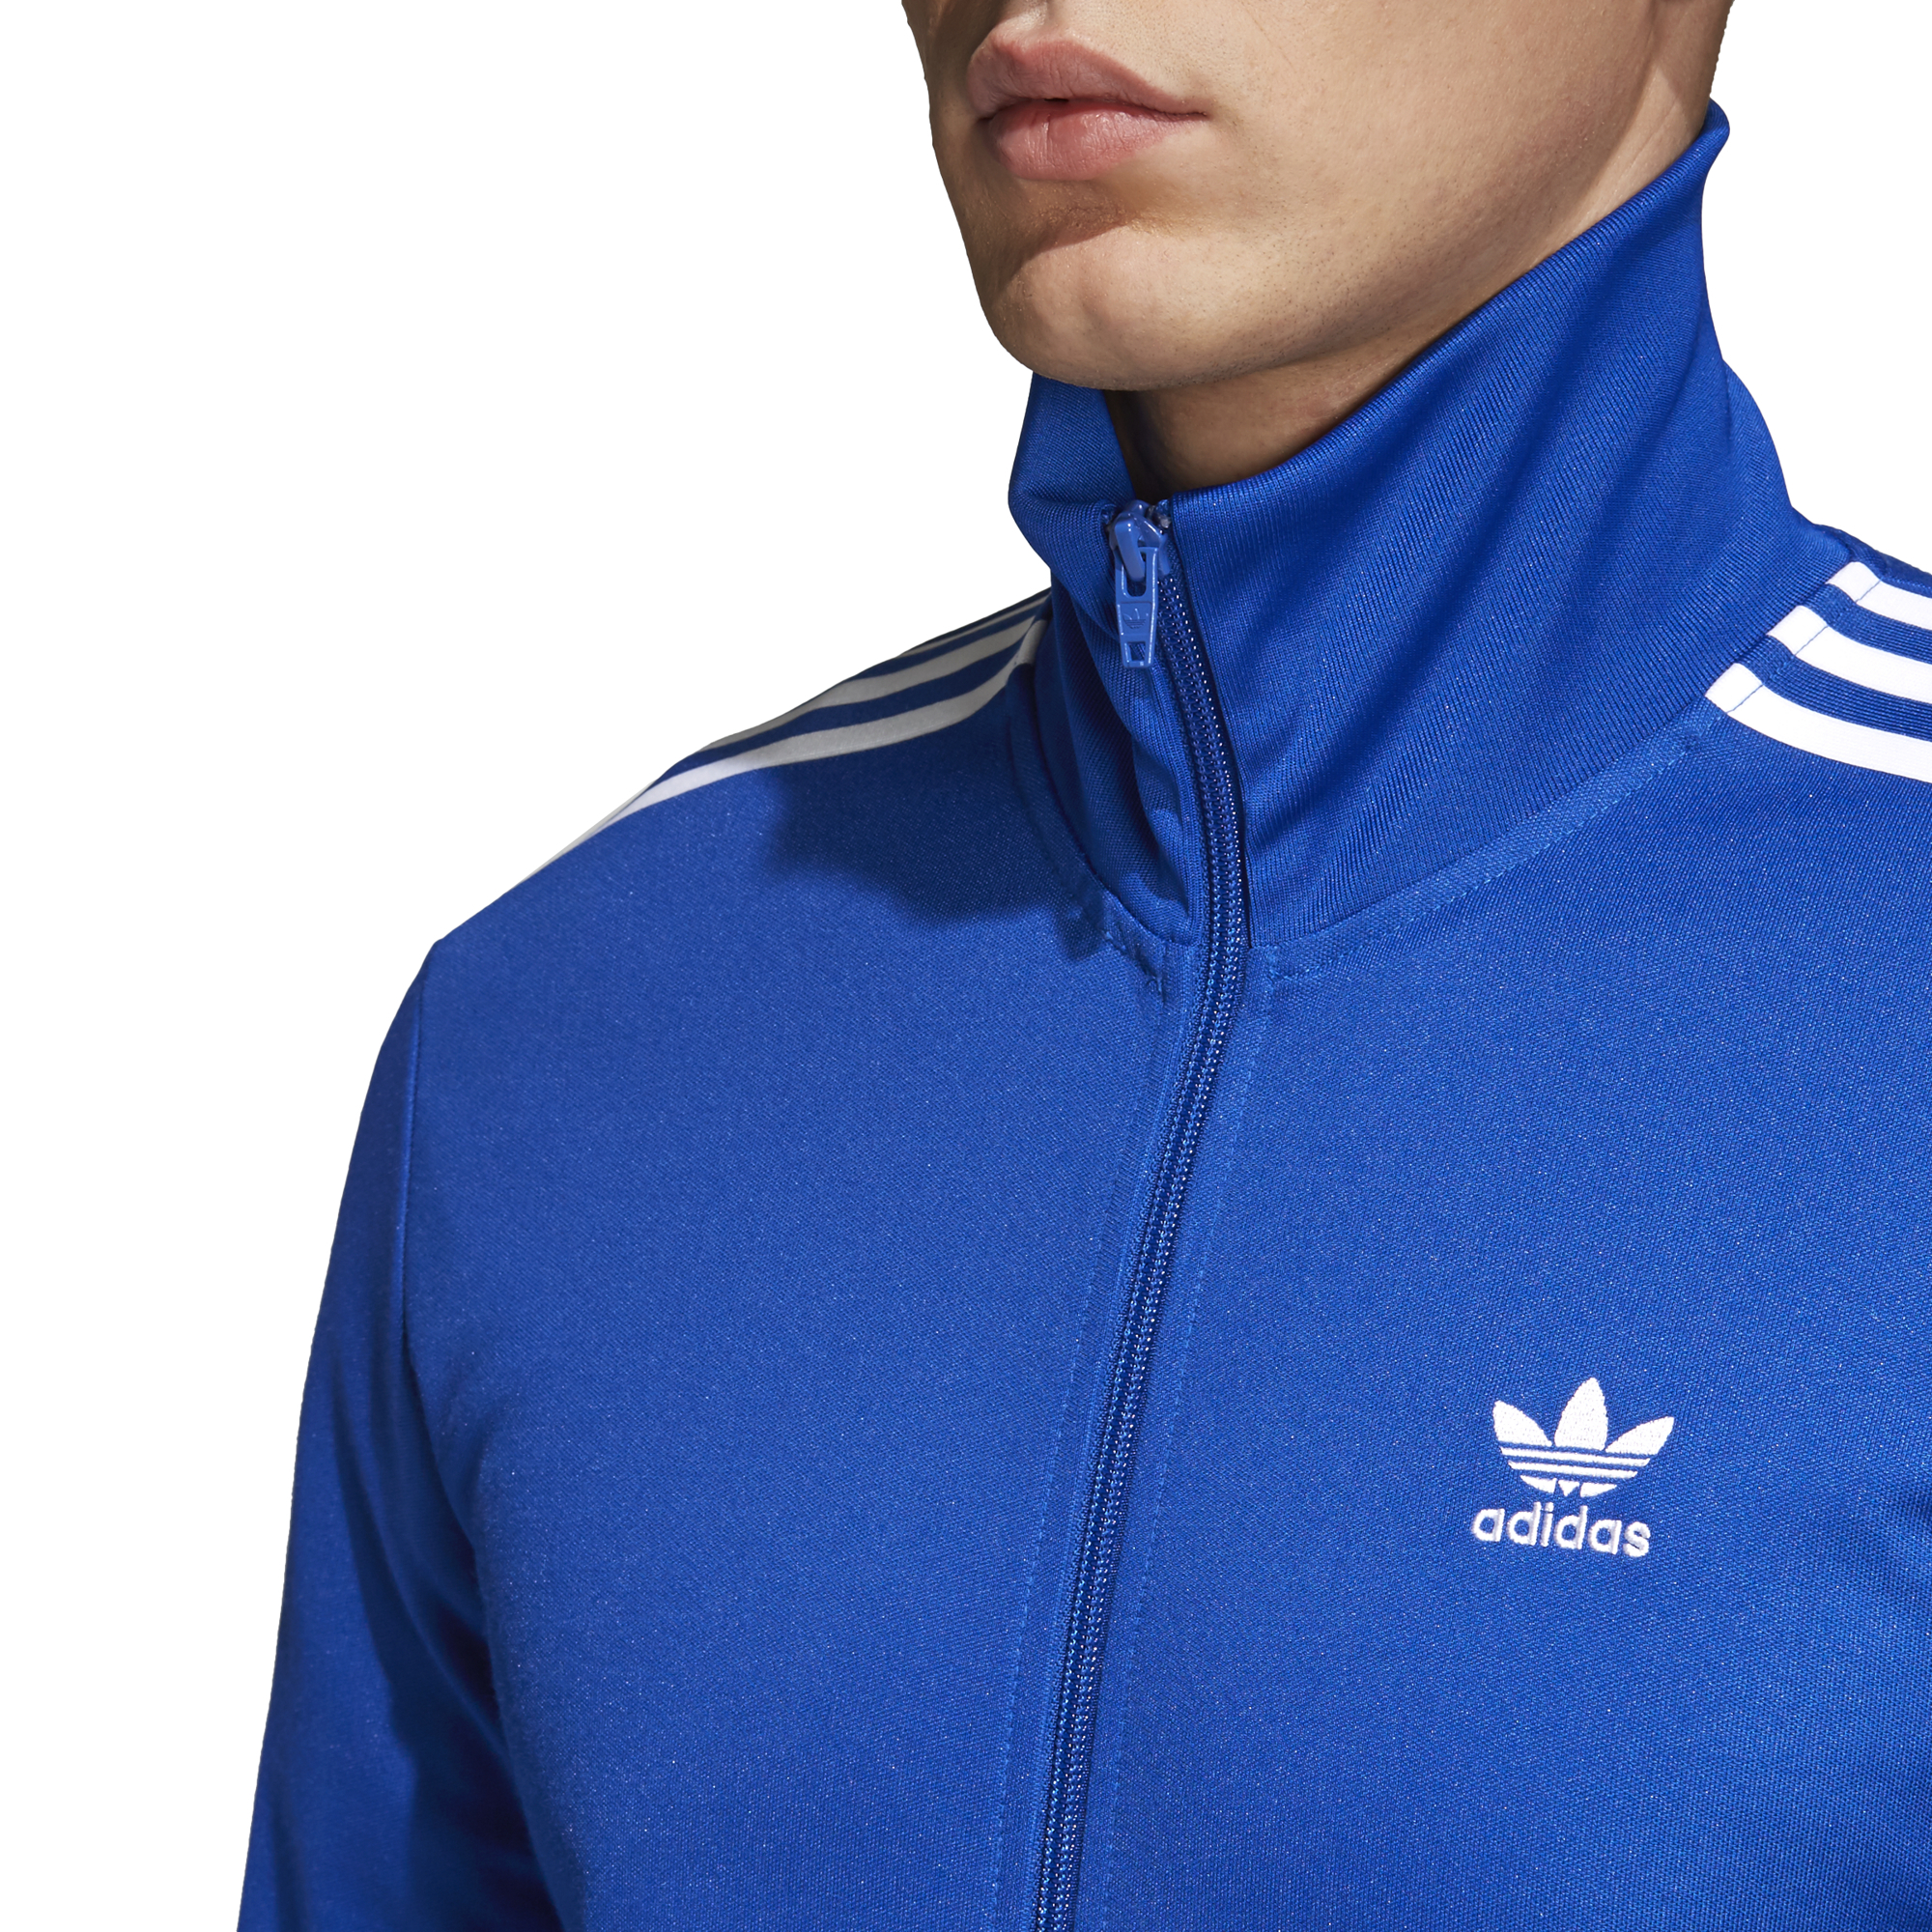 adidas bb track jacket blue Shop Clothing & Shoes Online